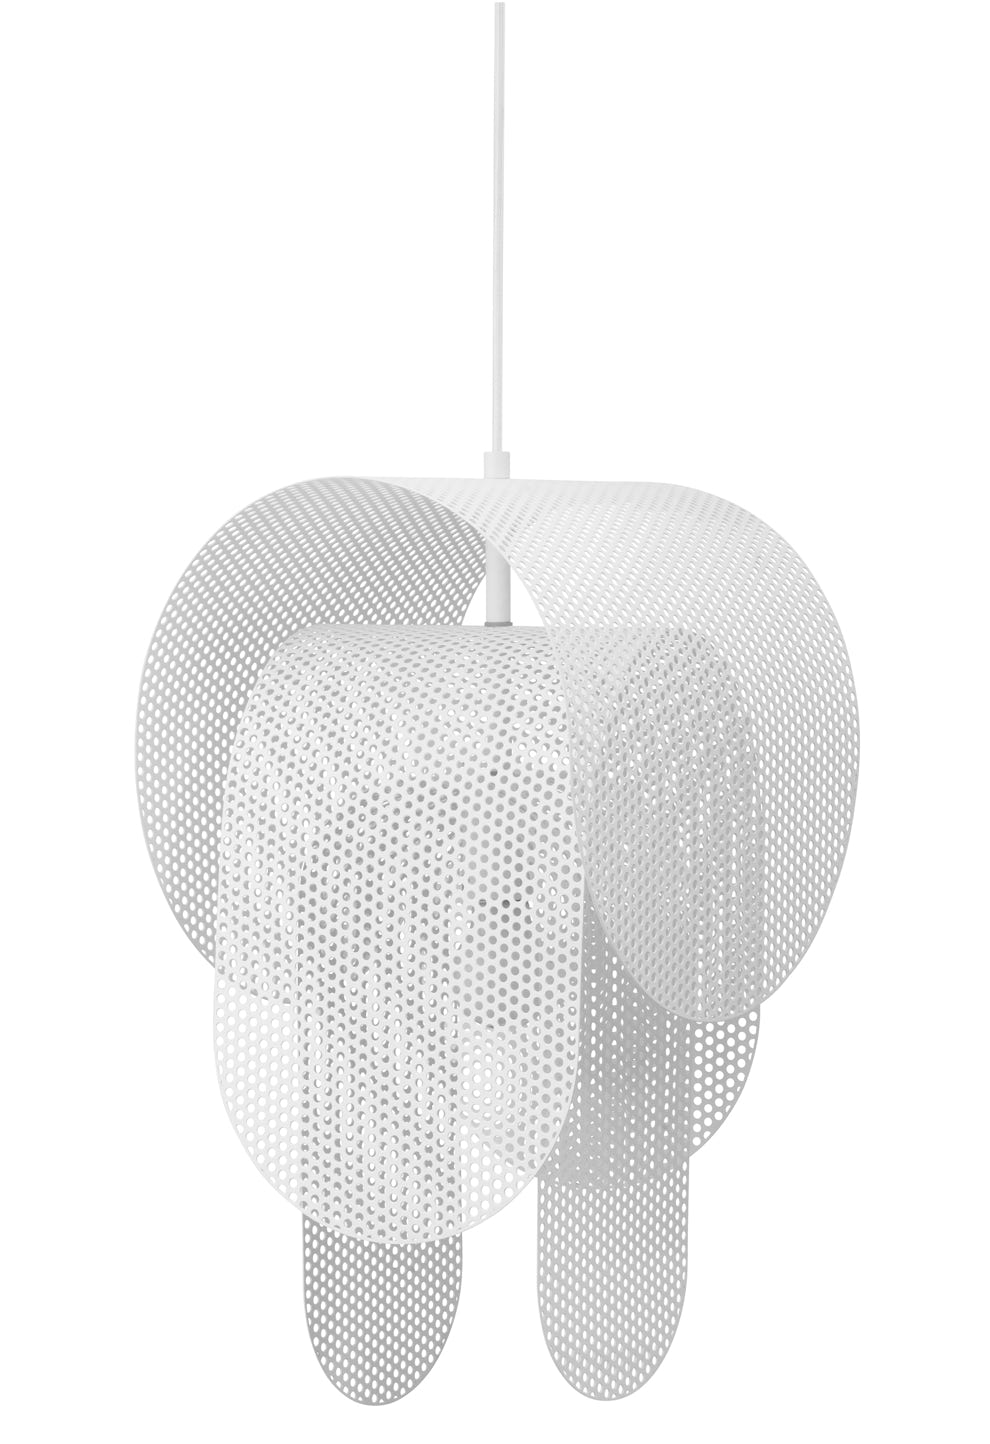 Superpose pendant Frederik Kurzweg Design Studio, 2020  